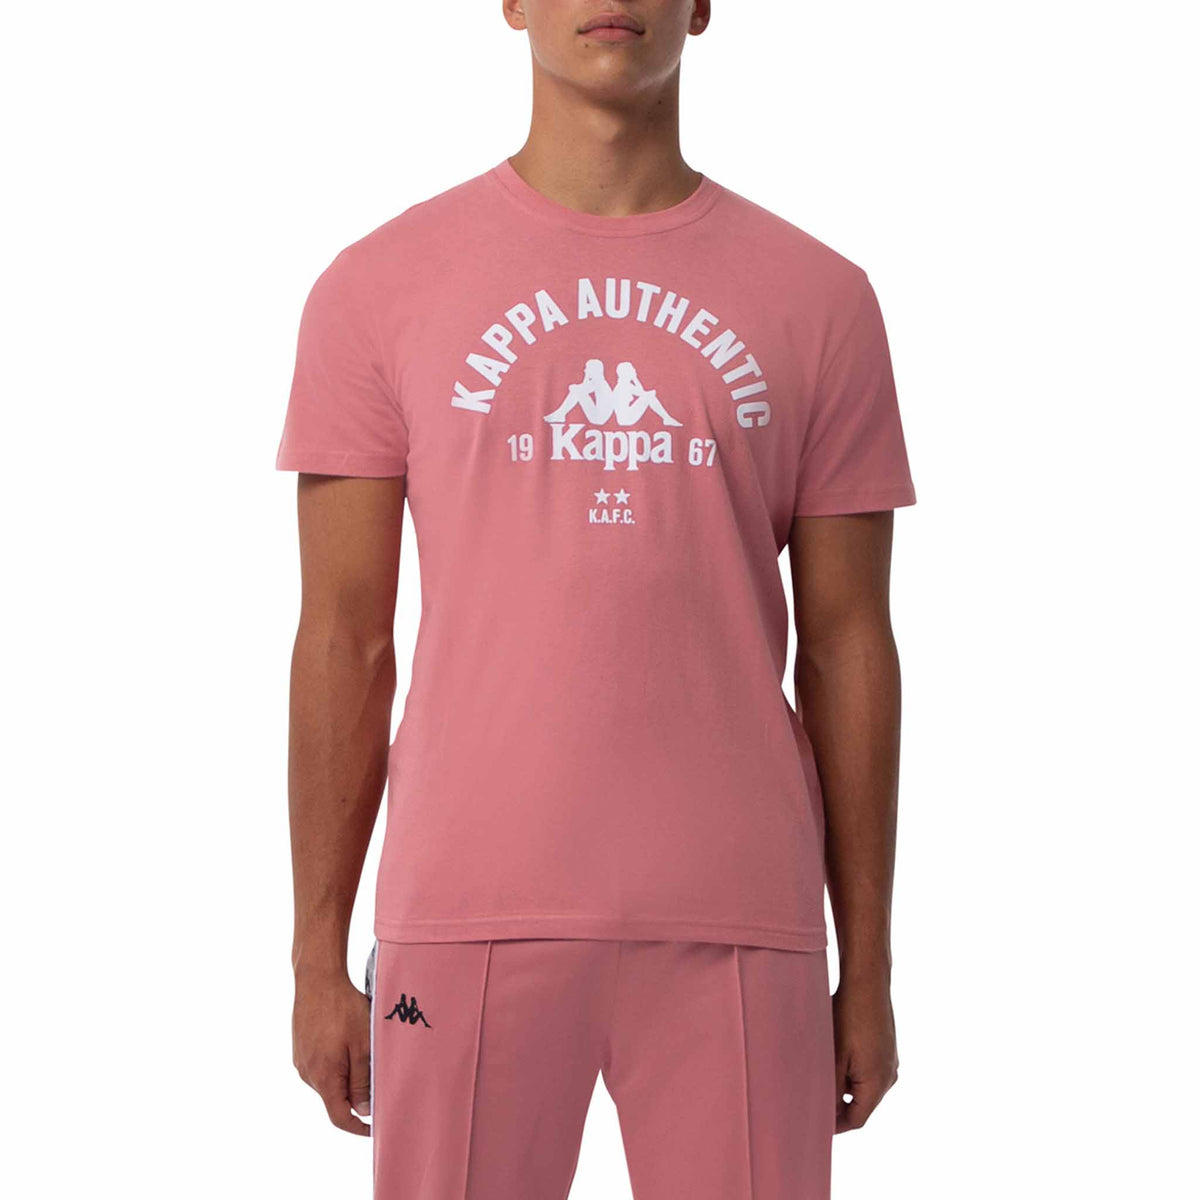 T-shirt Kappa Authentic Capurro slim pour homme Rose/Blanc